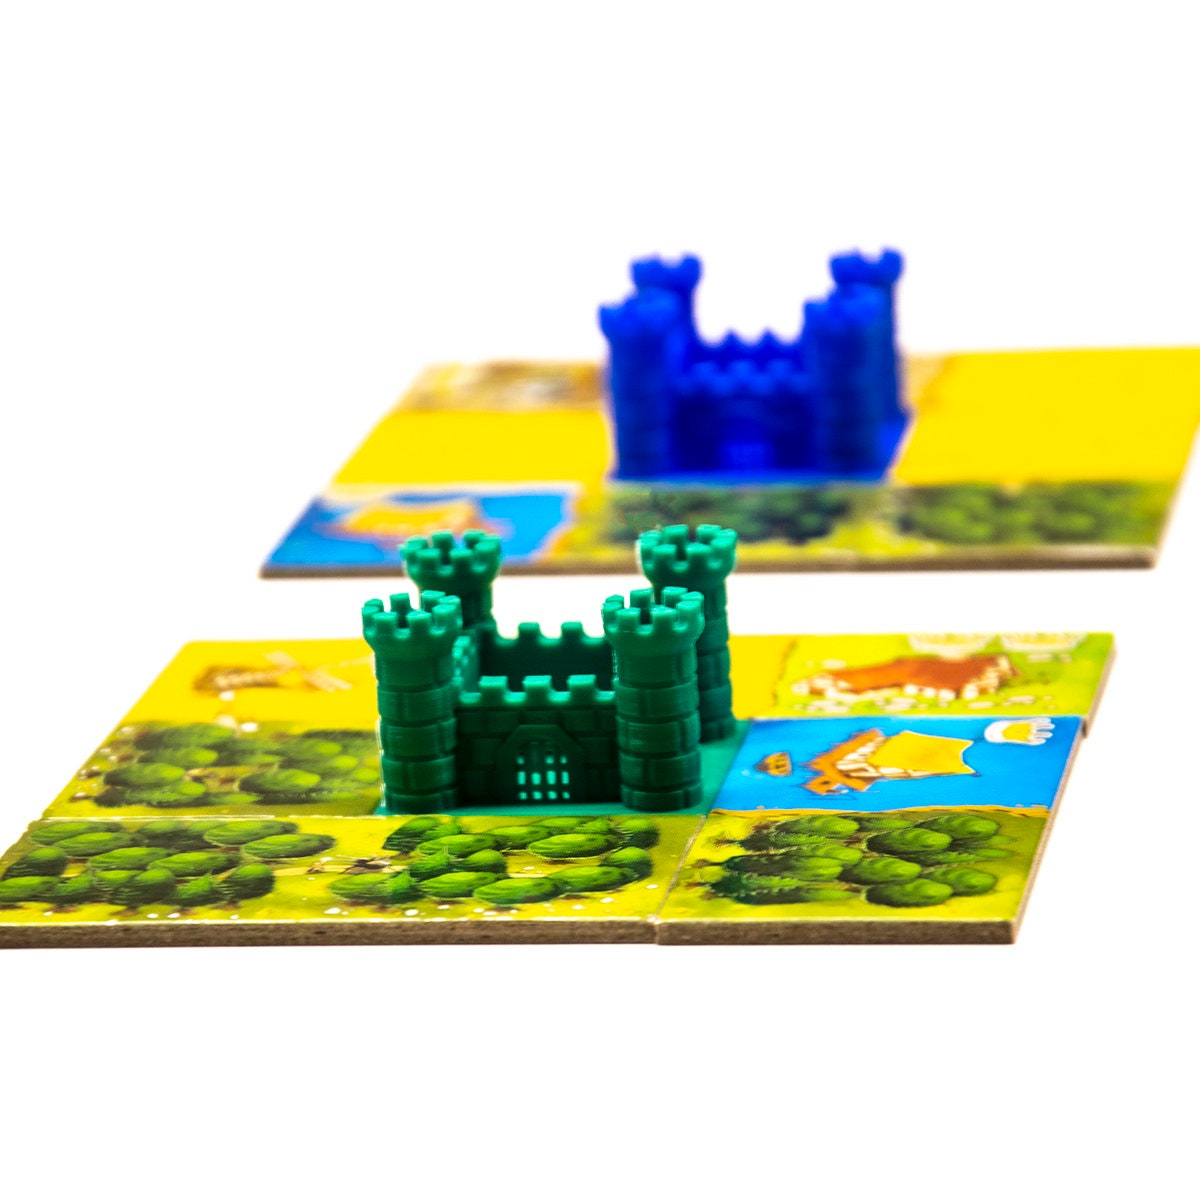 Kingdomino - Toys & Co. - Blue Orange Games